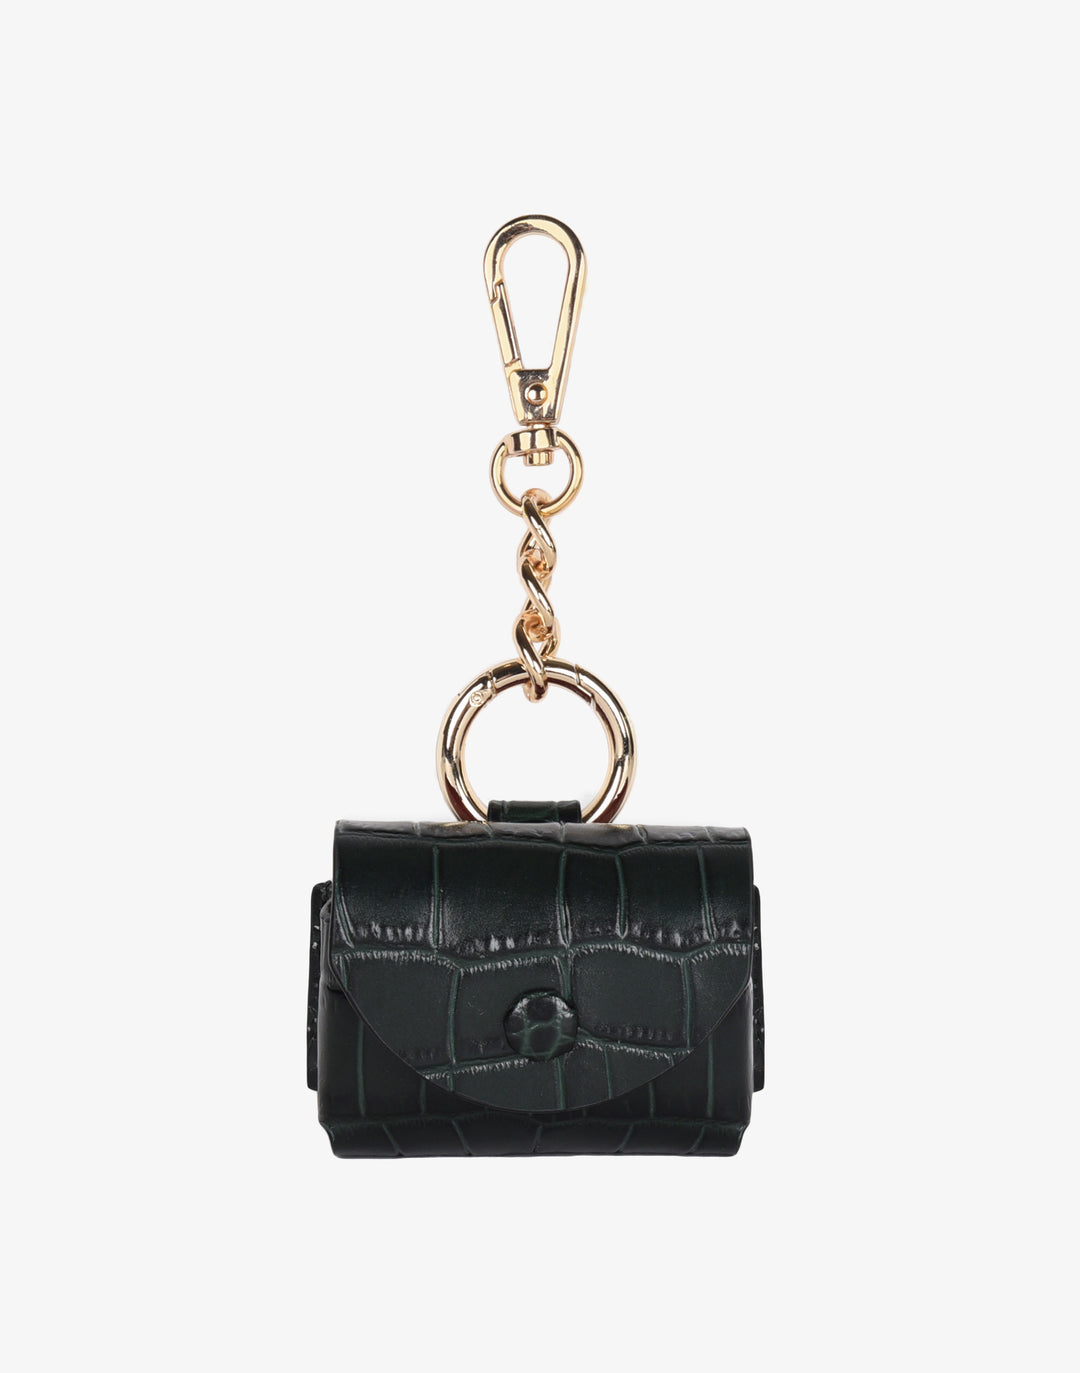 Luxury Leather Coin Purse Key Chain Air Pod Case Bag Charm 